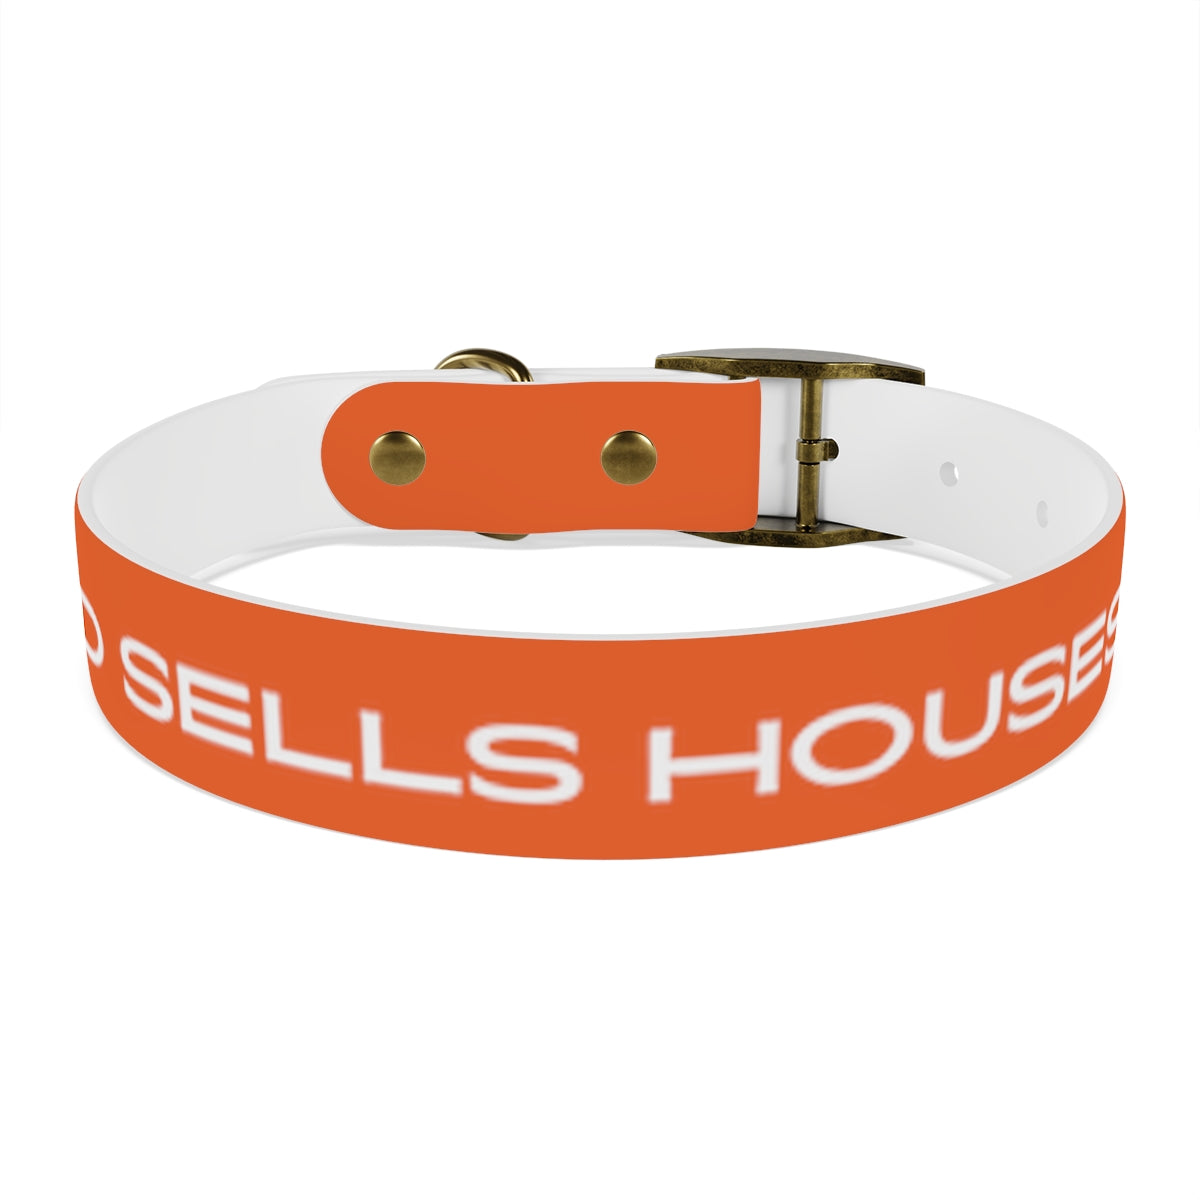 Dog Collar - My Dad Sells Houses - Orange